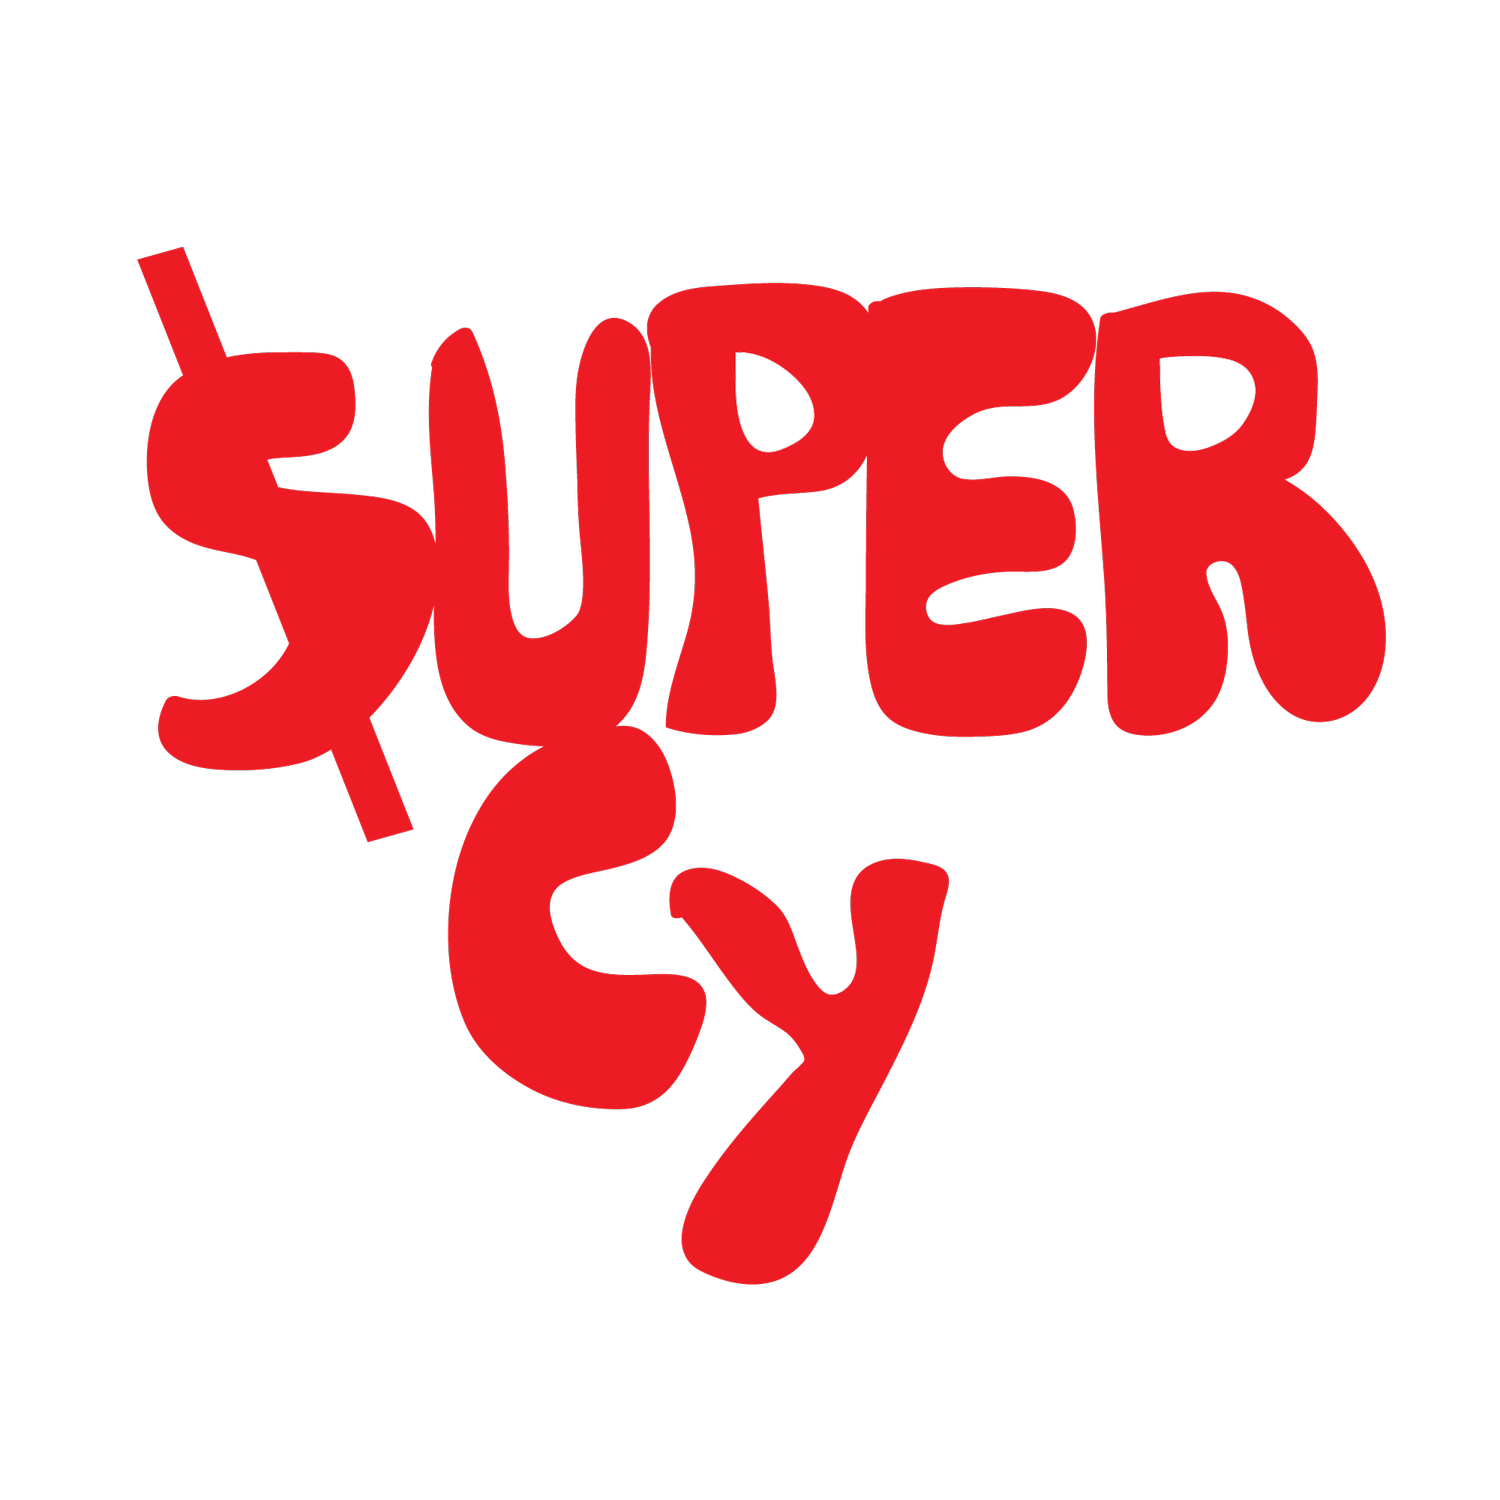 SUPER CY